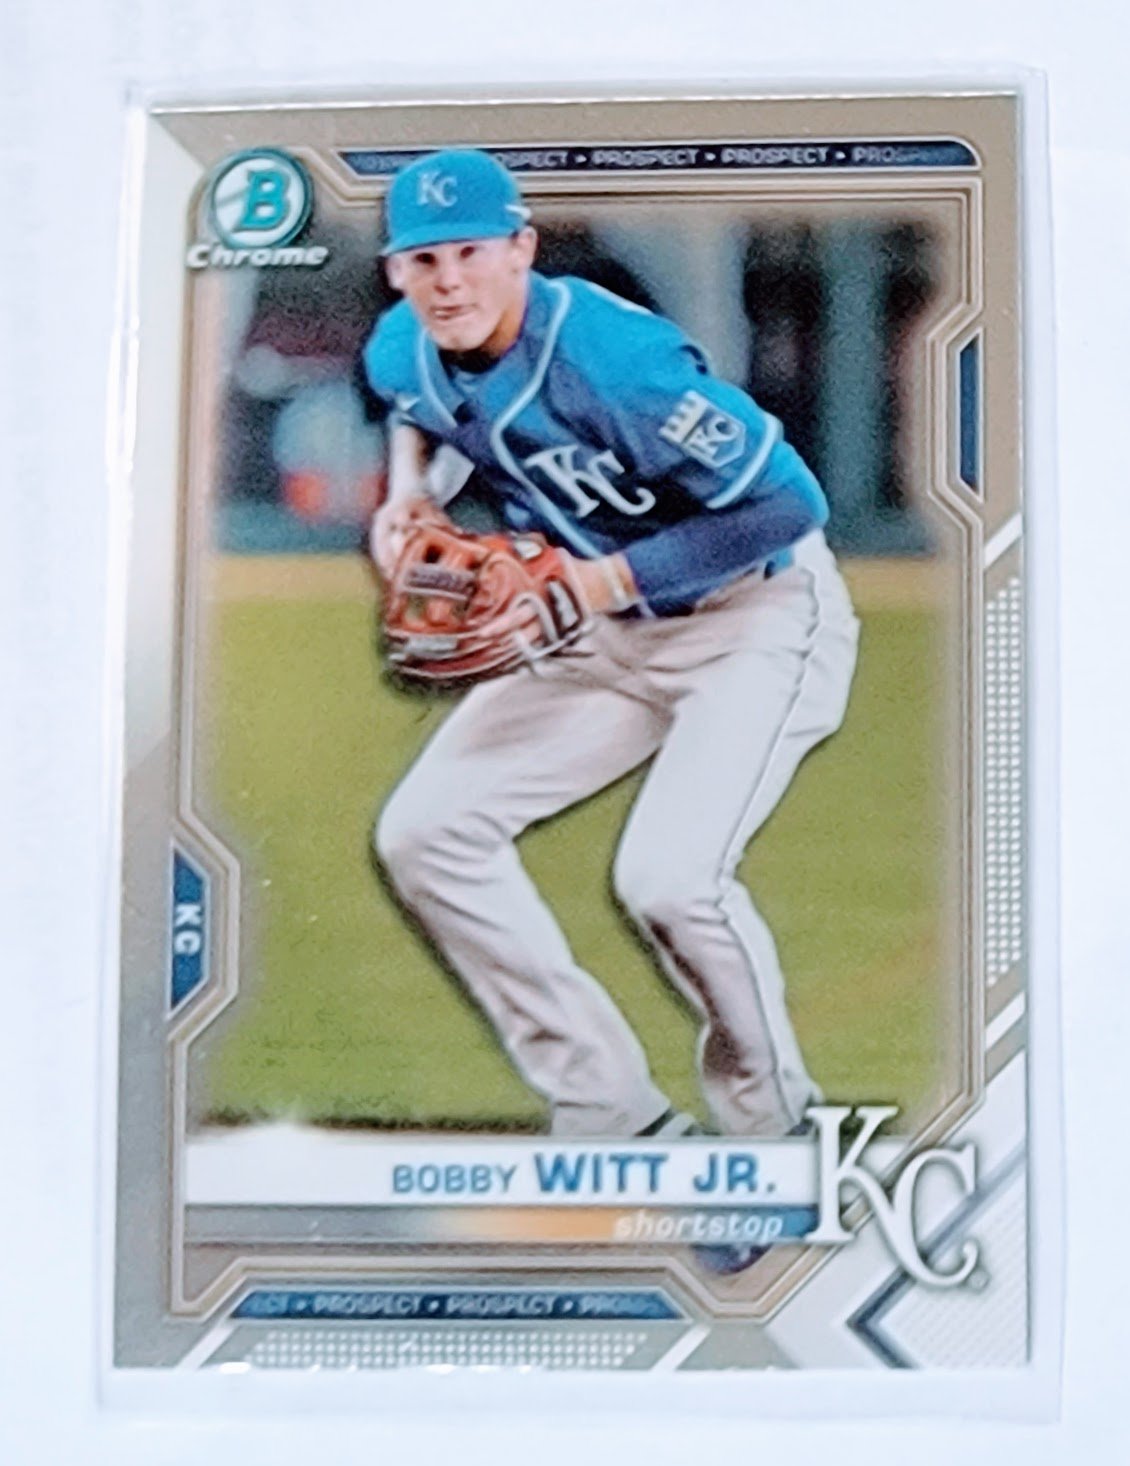 2021 Bowman Chrome Bobby Witt Jr Prospect Baseball Trading Card SMCB1 simple Xclusive Collectibles   